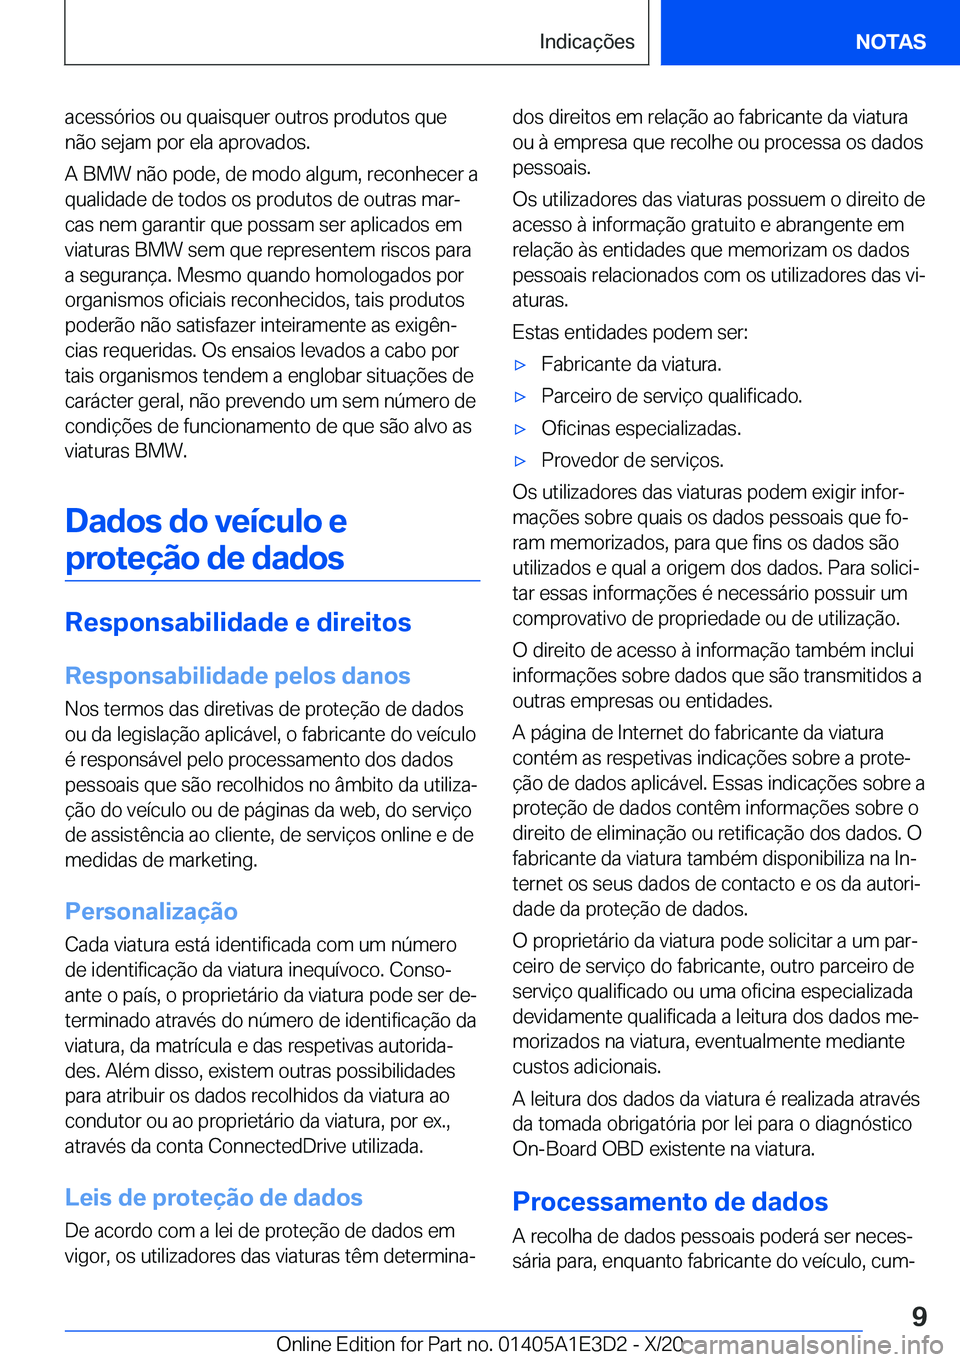 BMW M4 2021  Manual do condutor (in Portuguese) �a�c�e�s�s�ó�r�i�o�s��o�u��q�u�a�i�s�q�u�e�r��o�u�t�r�o�s��p�r�o�d�u�t�o�s��q�u�e
�n�ã�o��s�e�j�a�m��p�o�r��e�l�a��a�p�r�o�v�a�d�o�s�.
�A��B�M�W��n�ã�o��p�o�d�e�,��d�e��m�o�d�o��a�l�